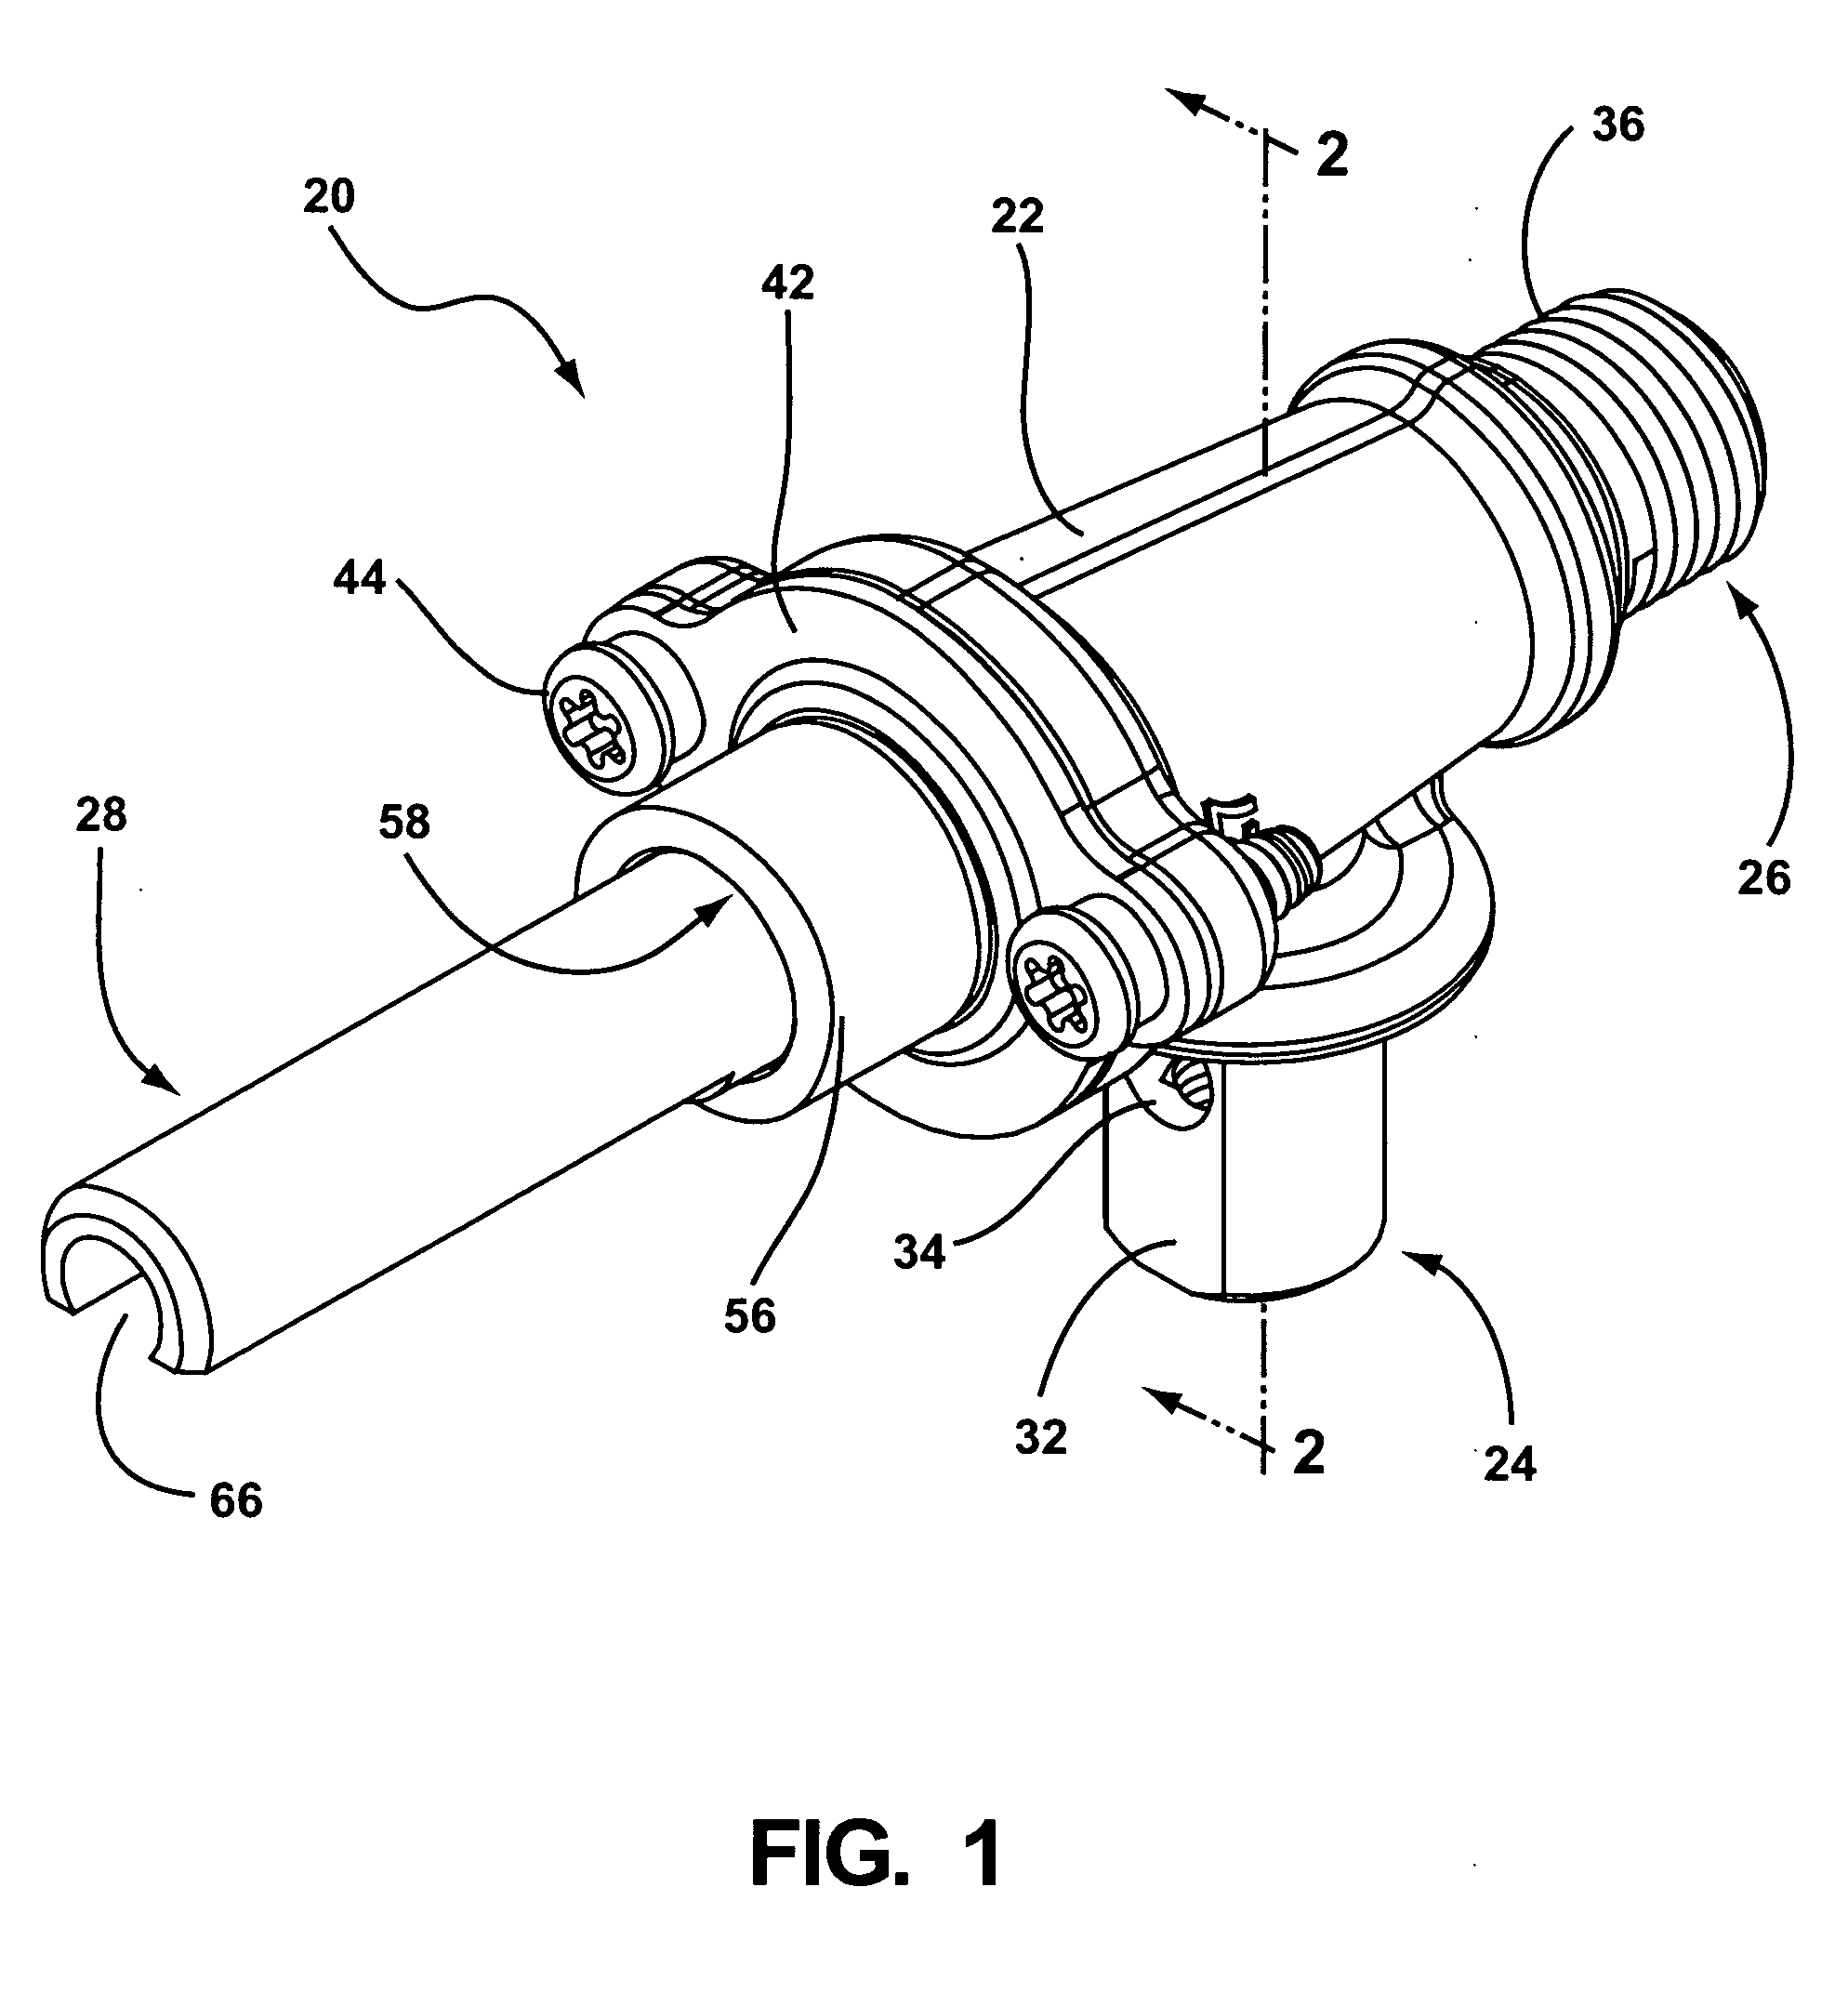 Reinforced gas valve stem